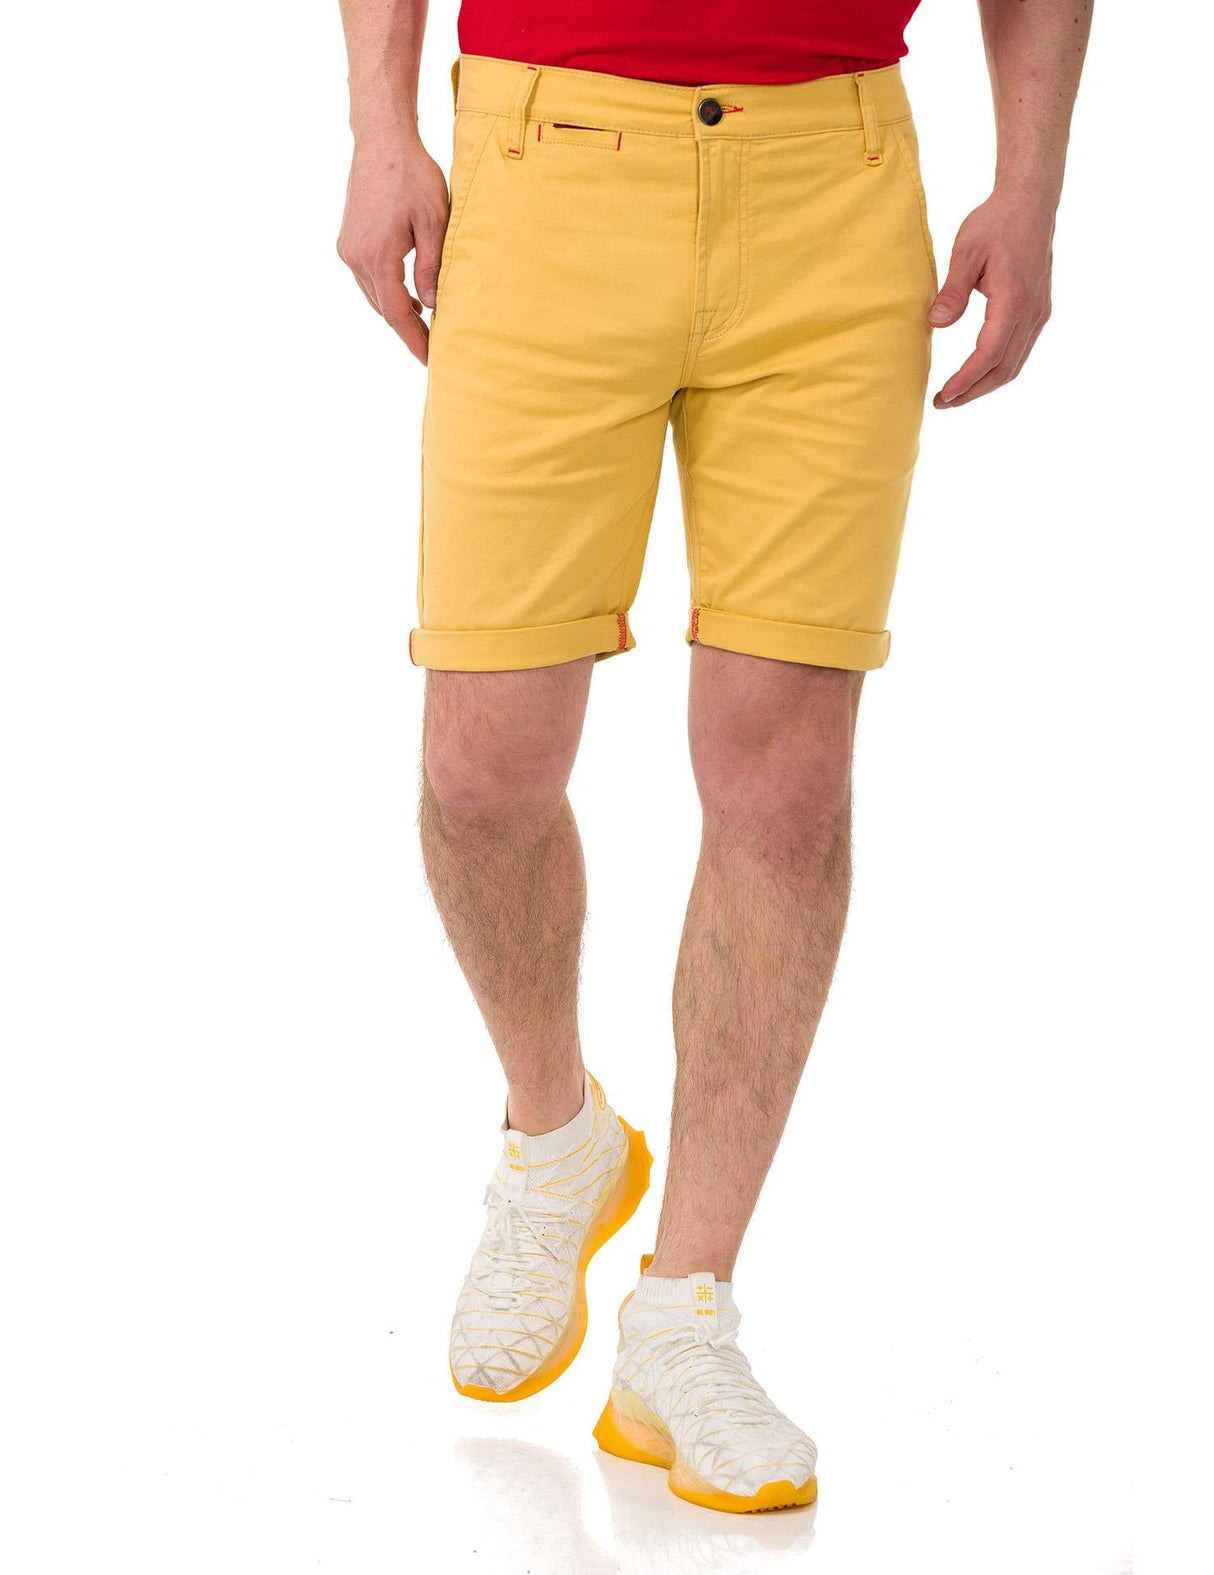 CK272 Men Capri Shorts Casual Look